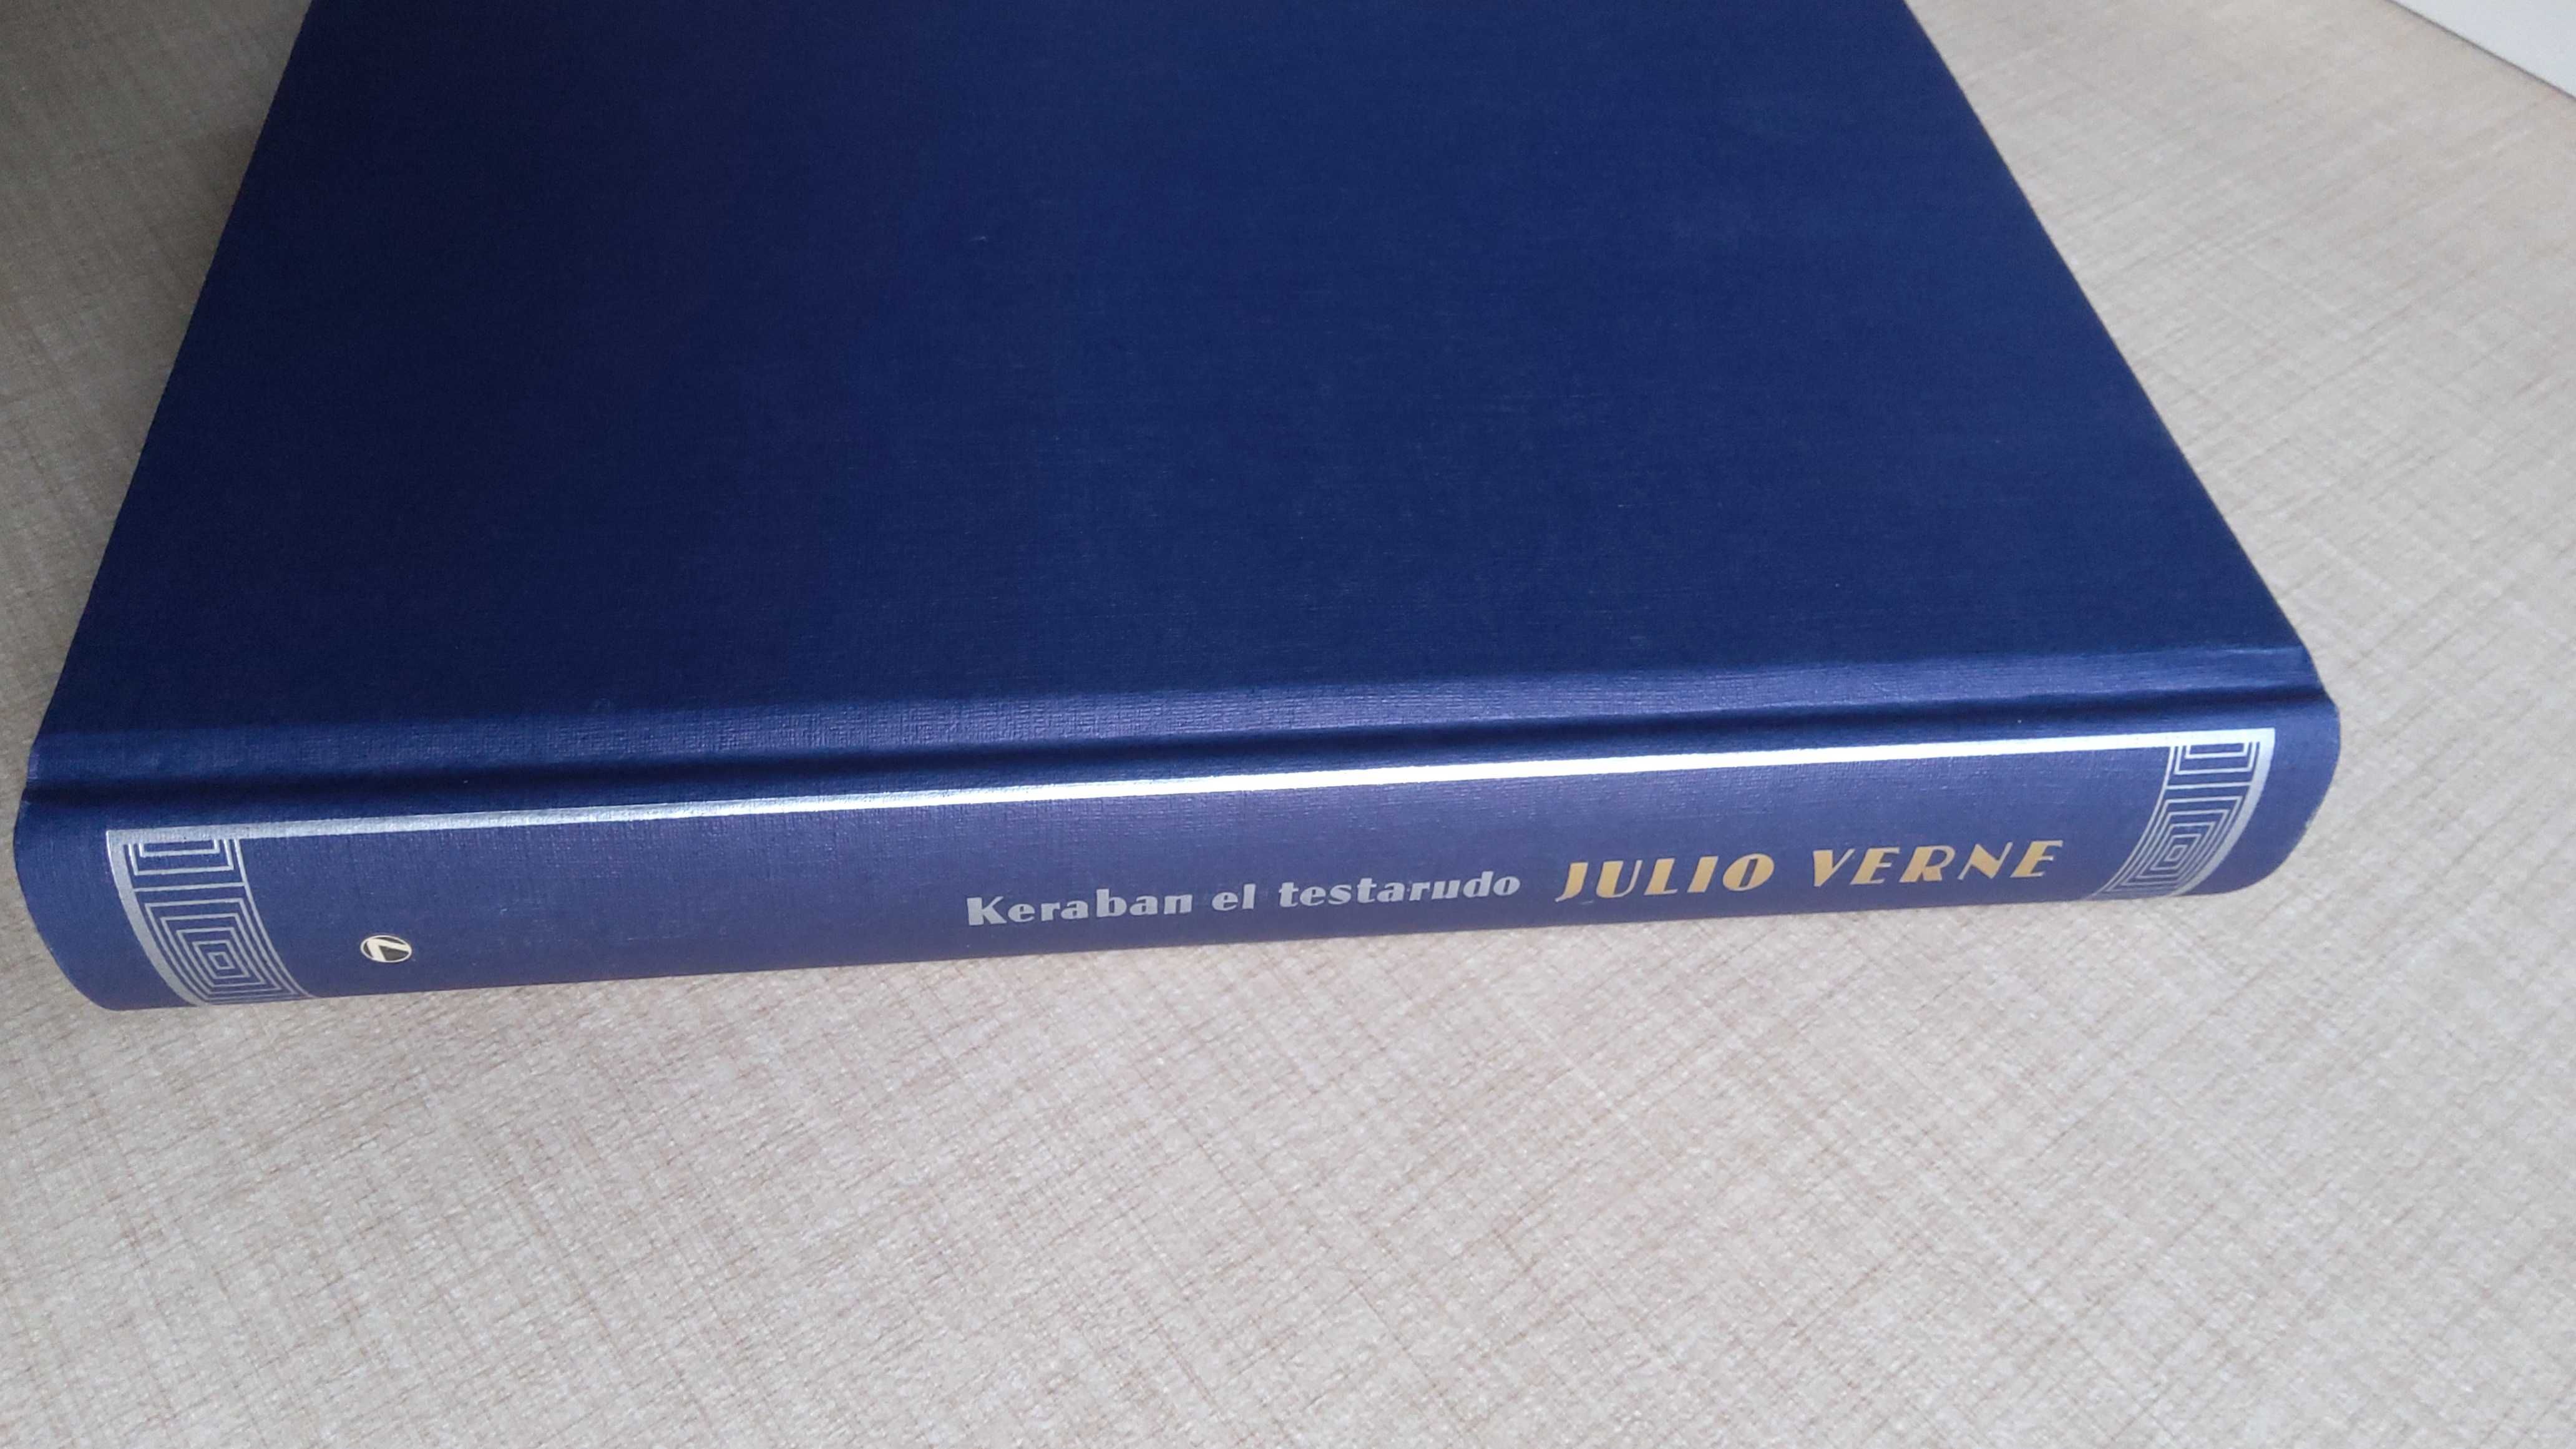 Julio Verne Keraban el testarudo hiszpański reprint oryginalnego wyd.